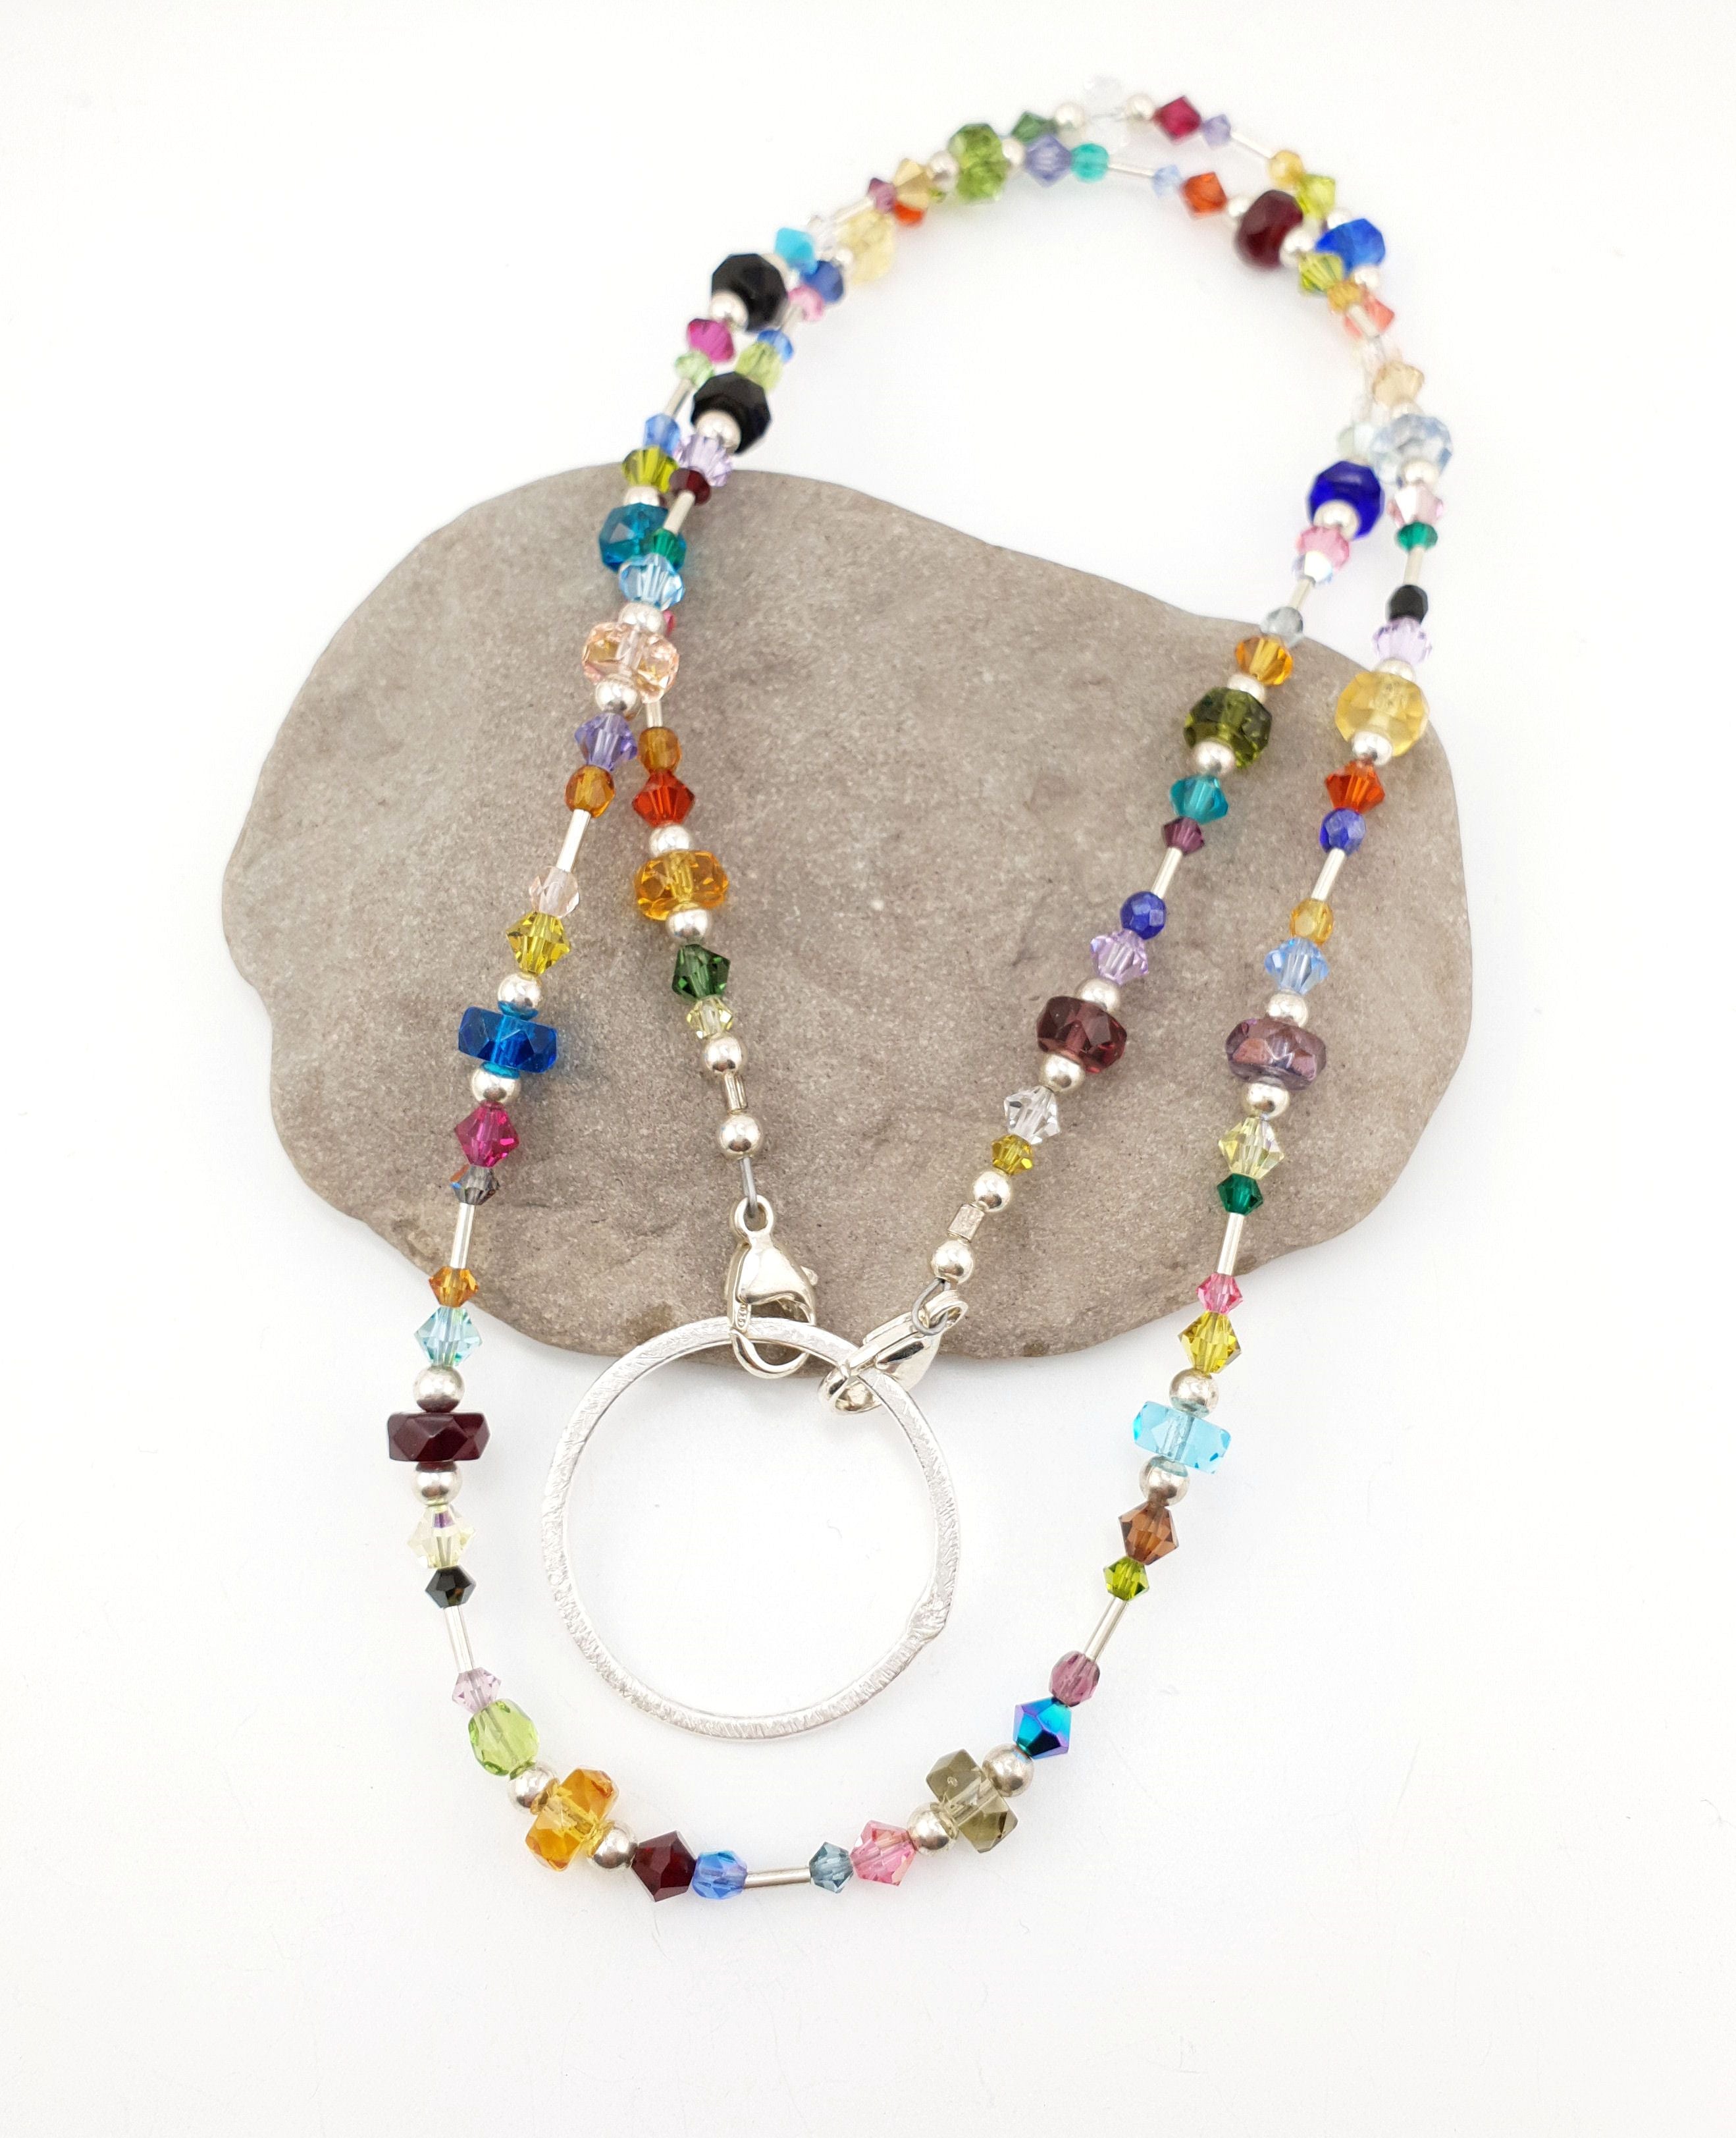 Multicolor Crystal & Czech Glass Eyeglass Necklace/Eyeglass Chain